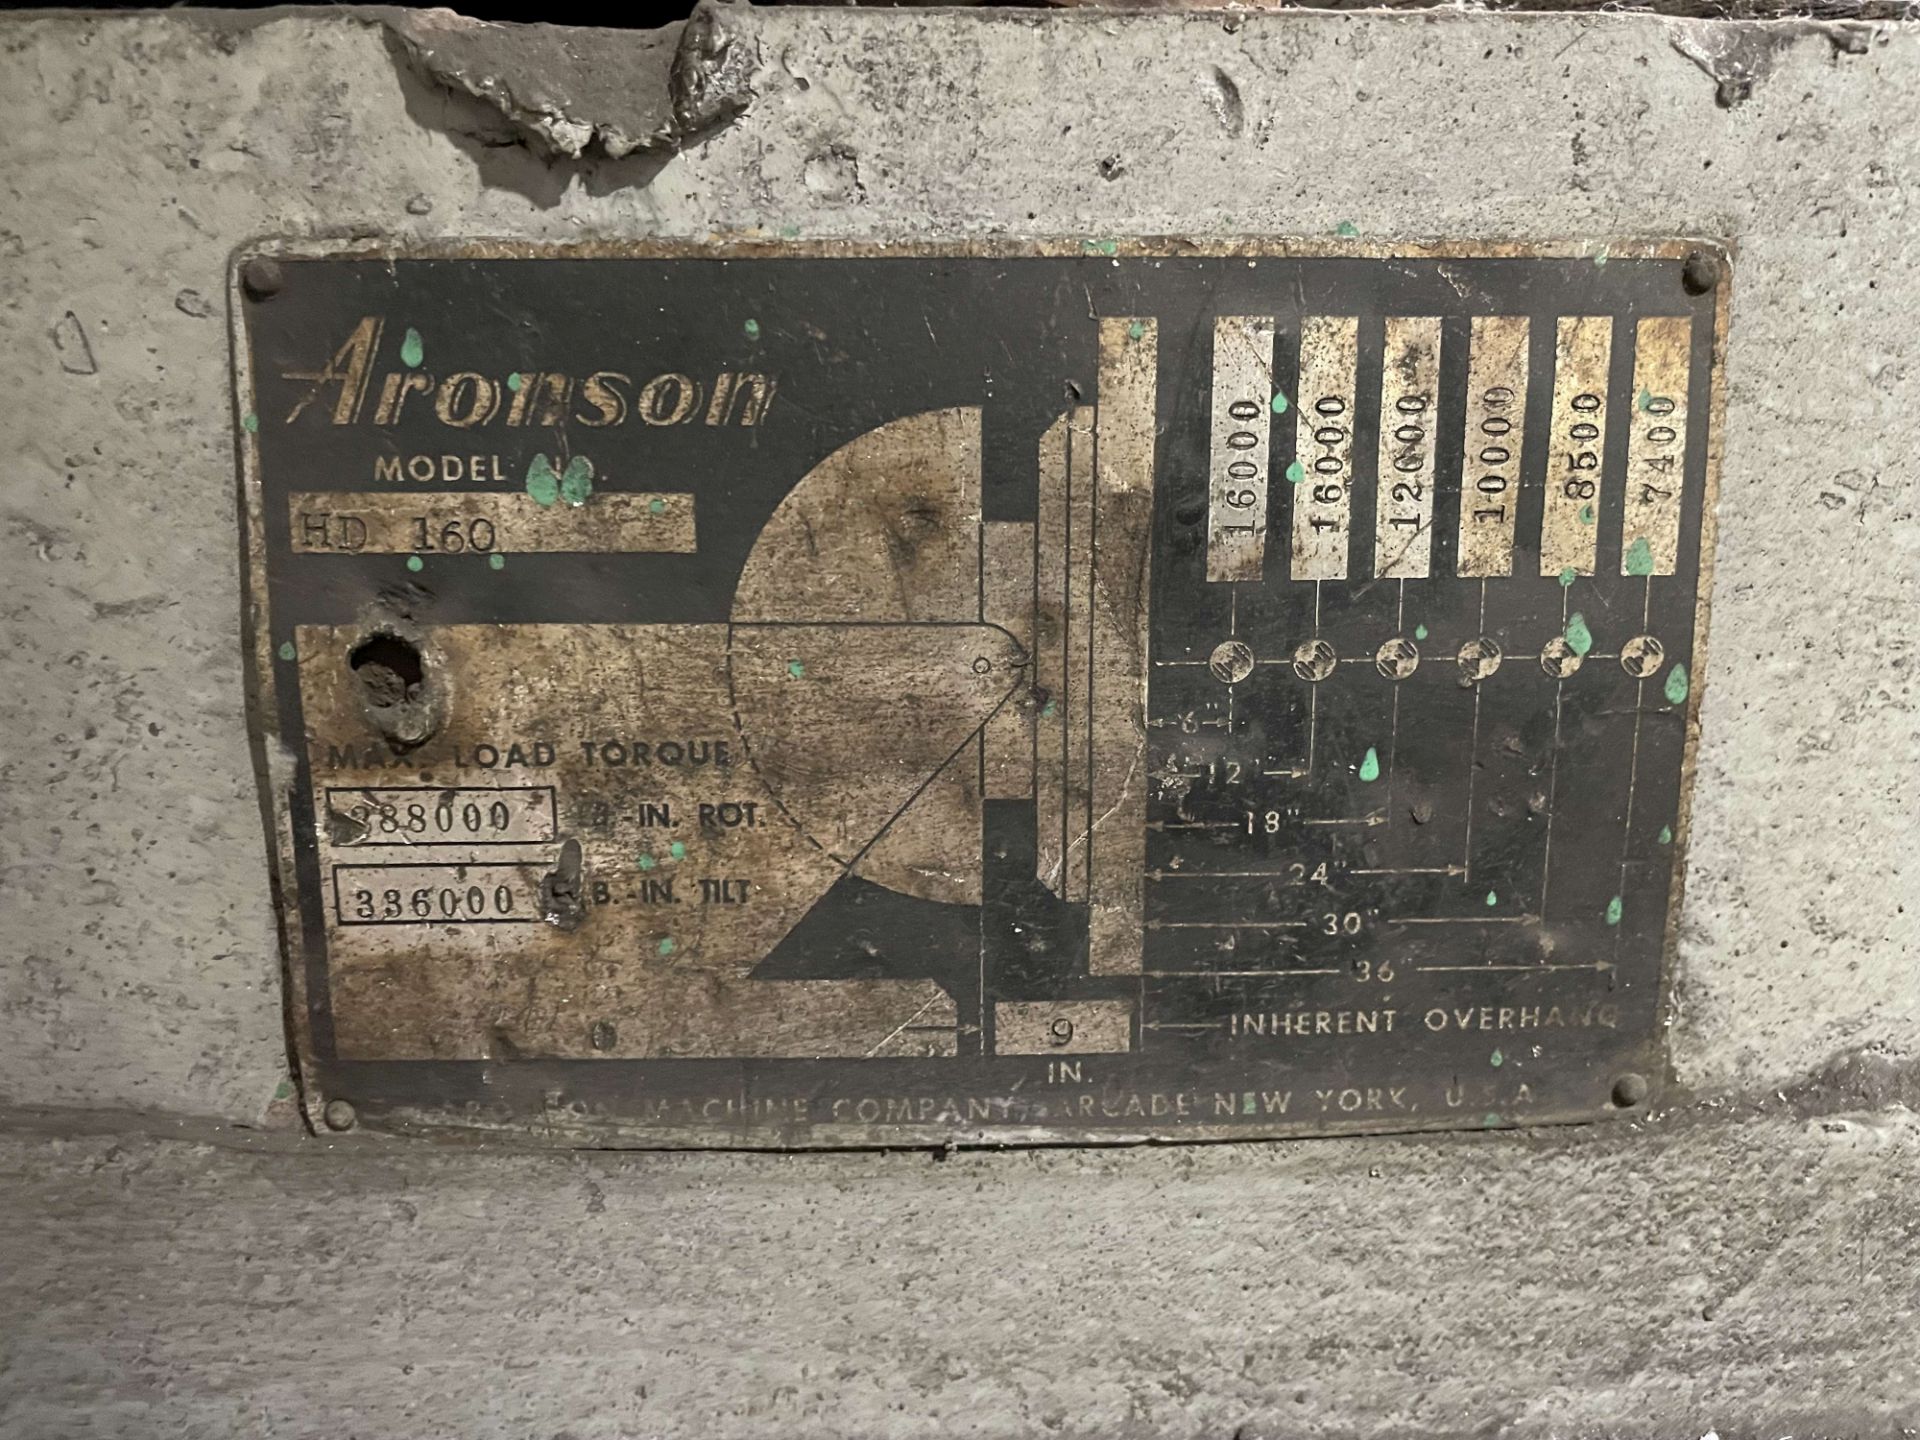 Aronson HD160 Welding Positioner (16,000 Lb. Cap.) - Image 7 of 7